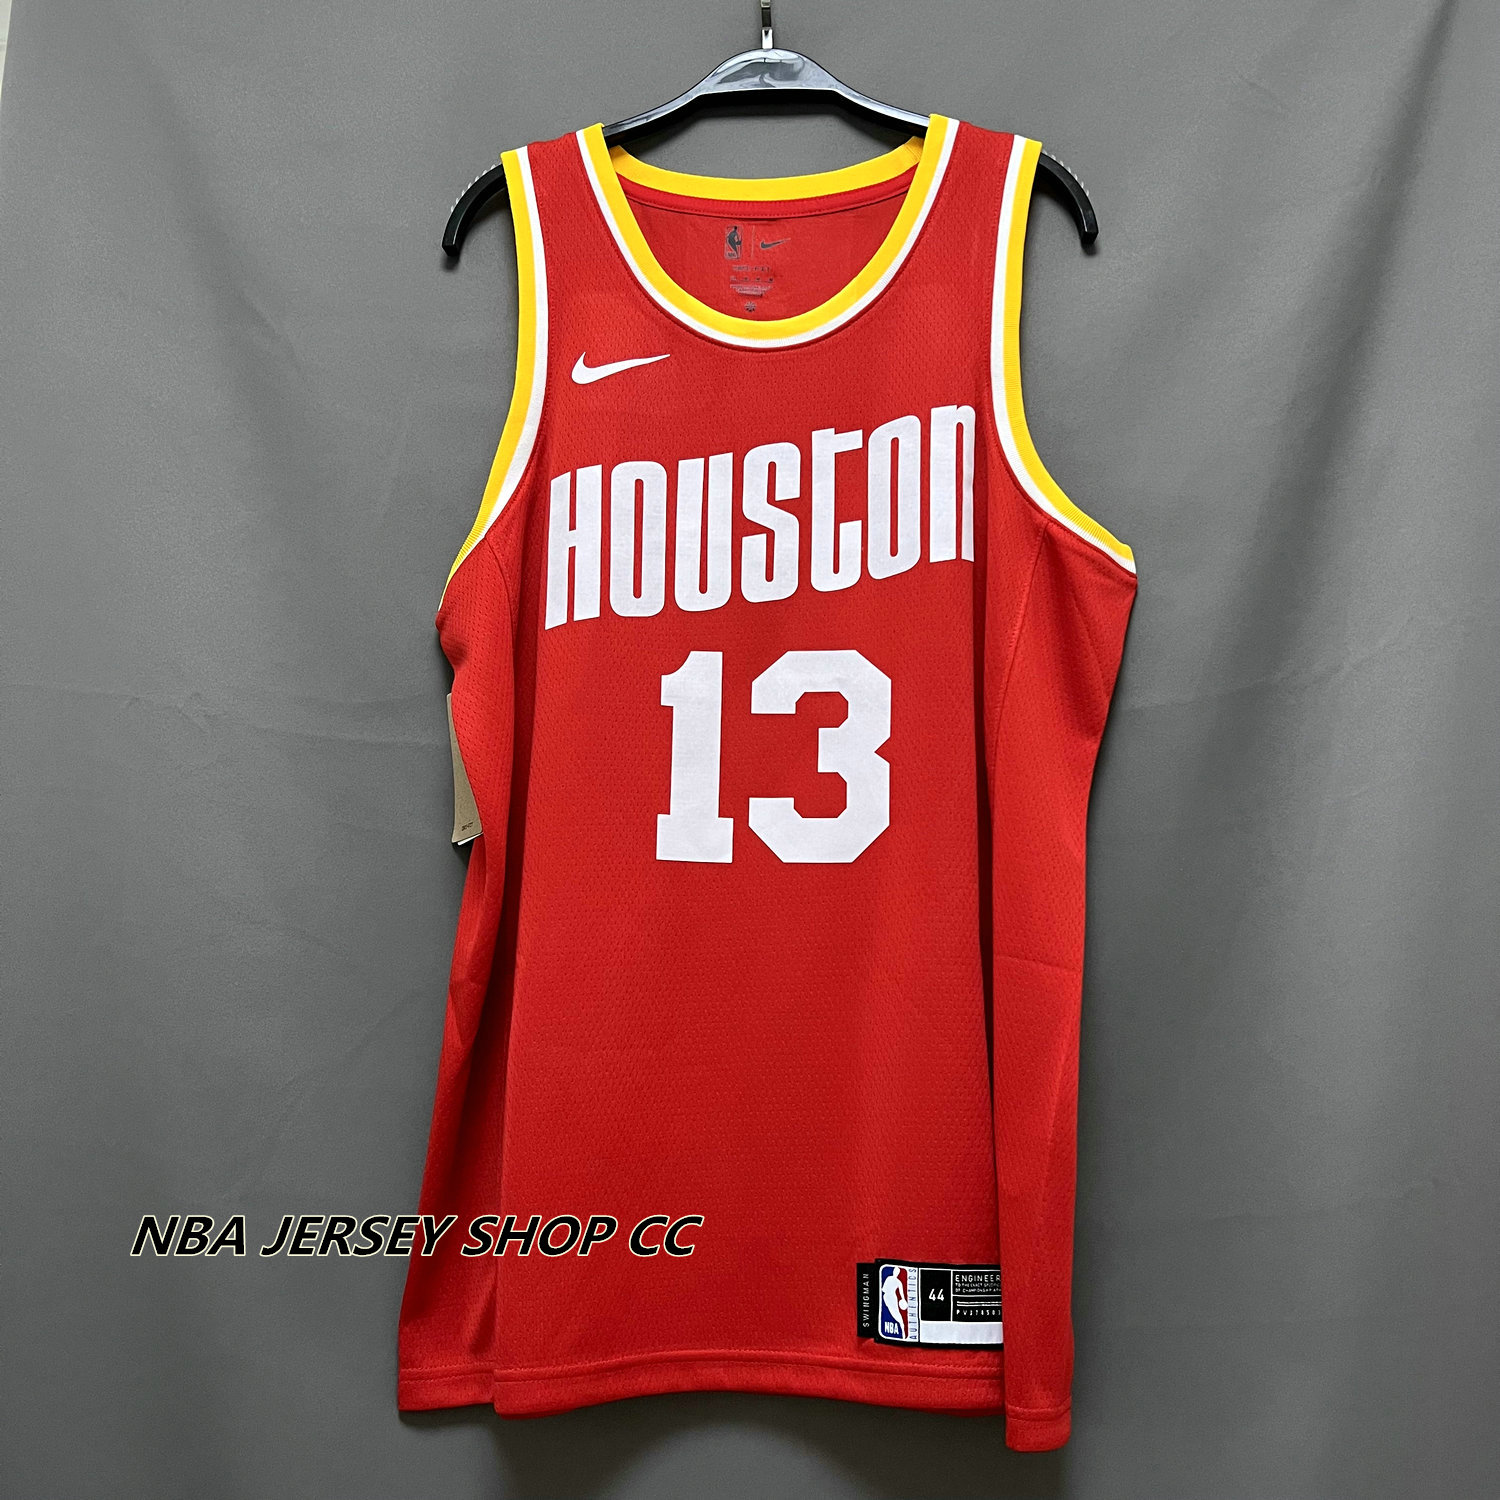 Adidas NBA Baby's Houston Rockets James Harden #13 Jersey Romper